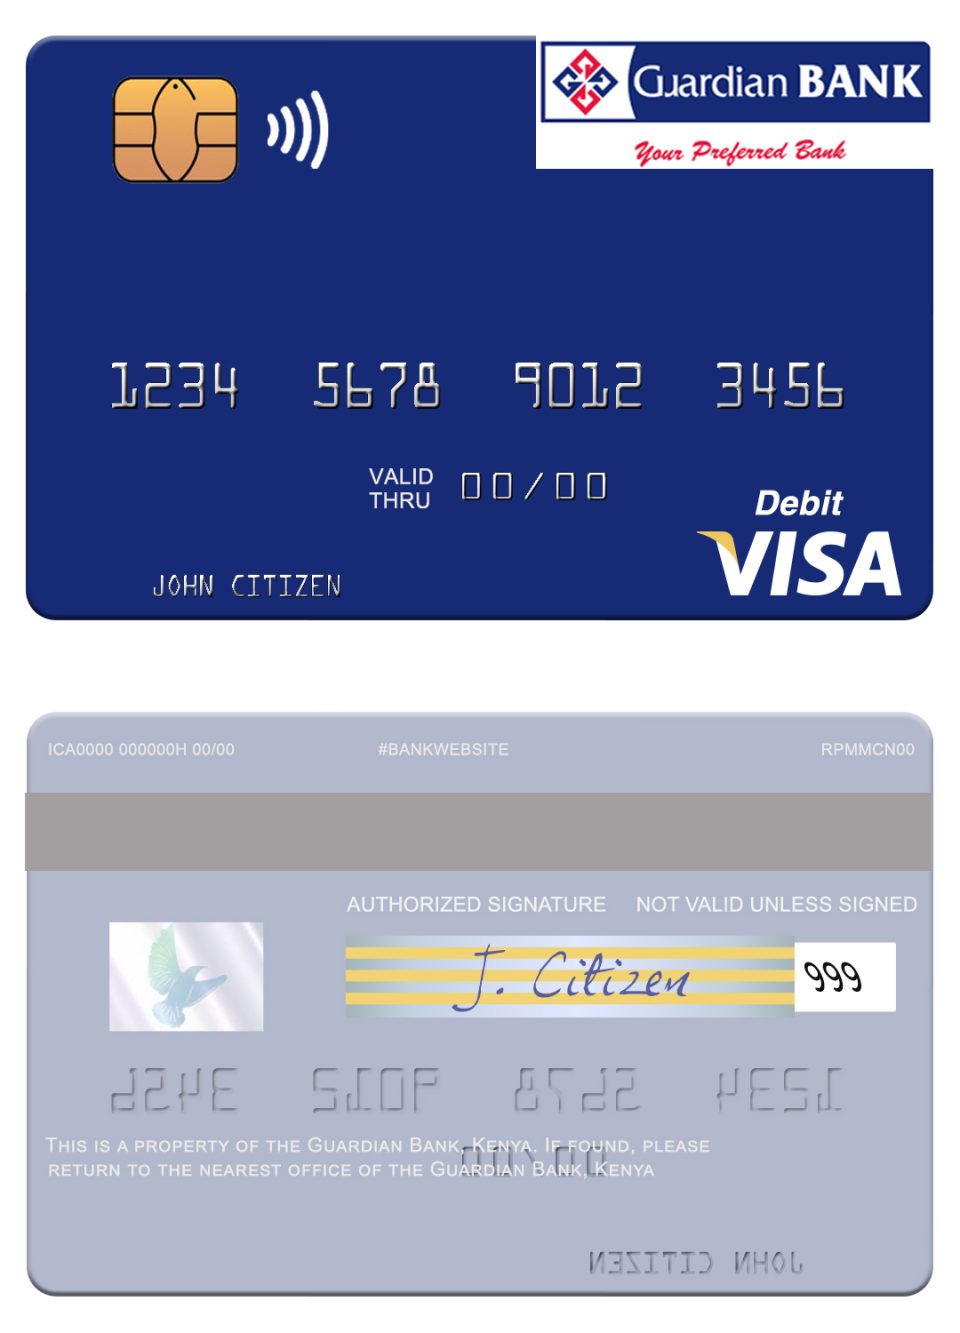 Fillable Kenya Guardian Bank visa card Templates | Layer-Based PSD